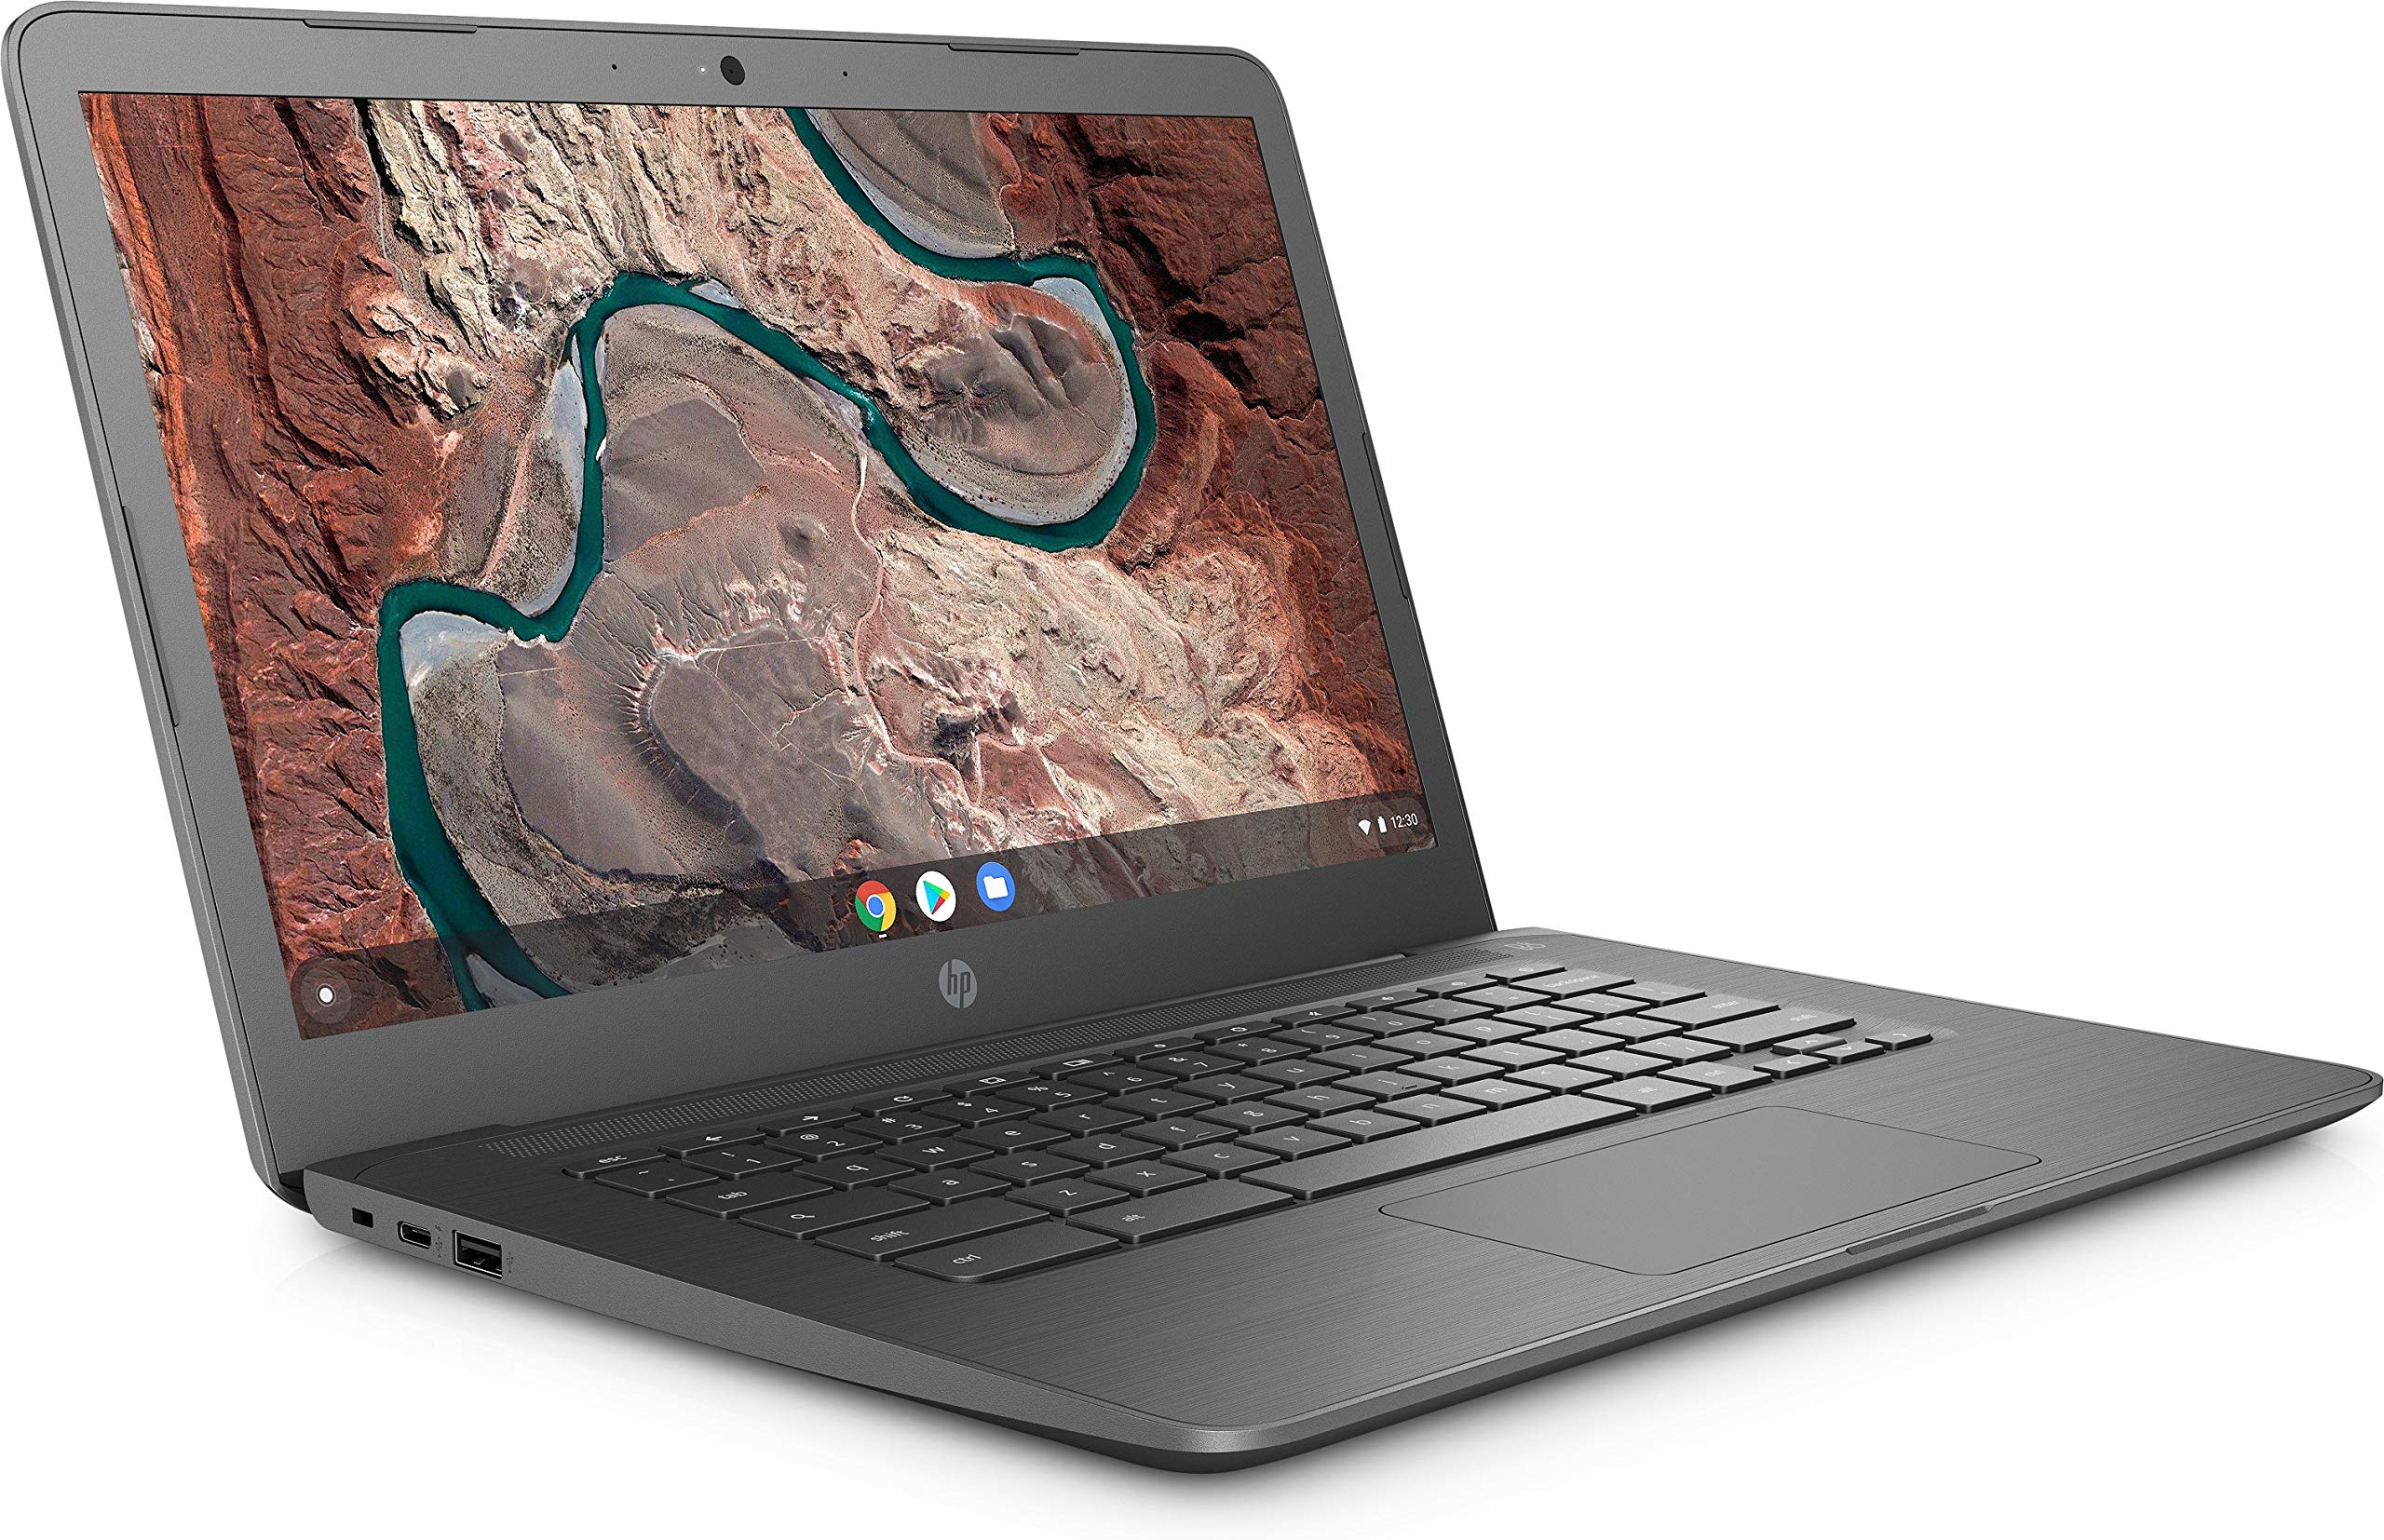 HP Chromebook 14-inch Laptop AMD Dual-Core A4-9120C Processor, 4 GB SDRAM, 32 GB eMMC Storage, Chrome OS (Gray)